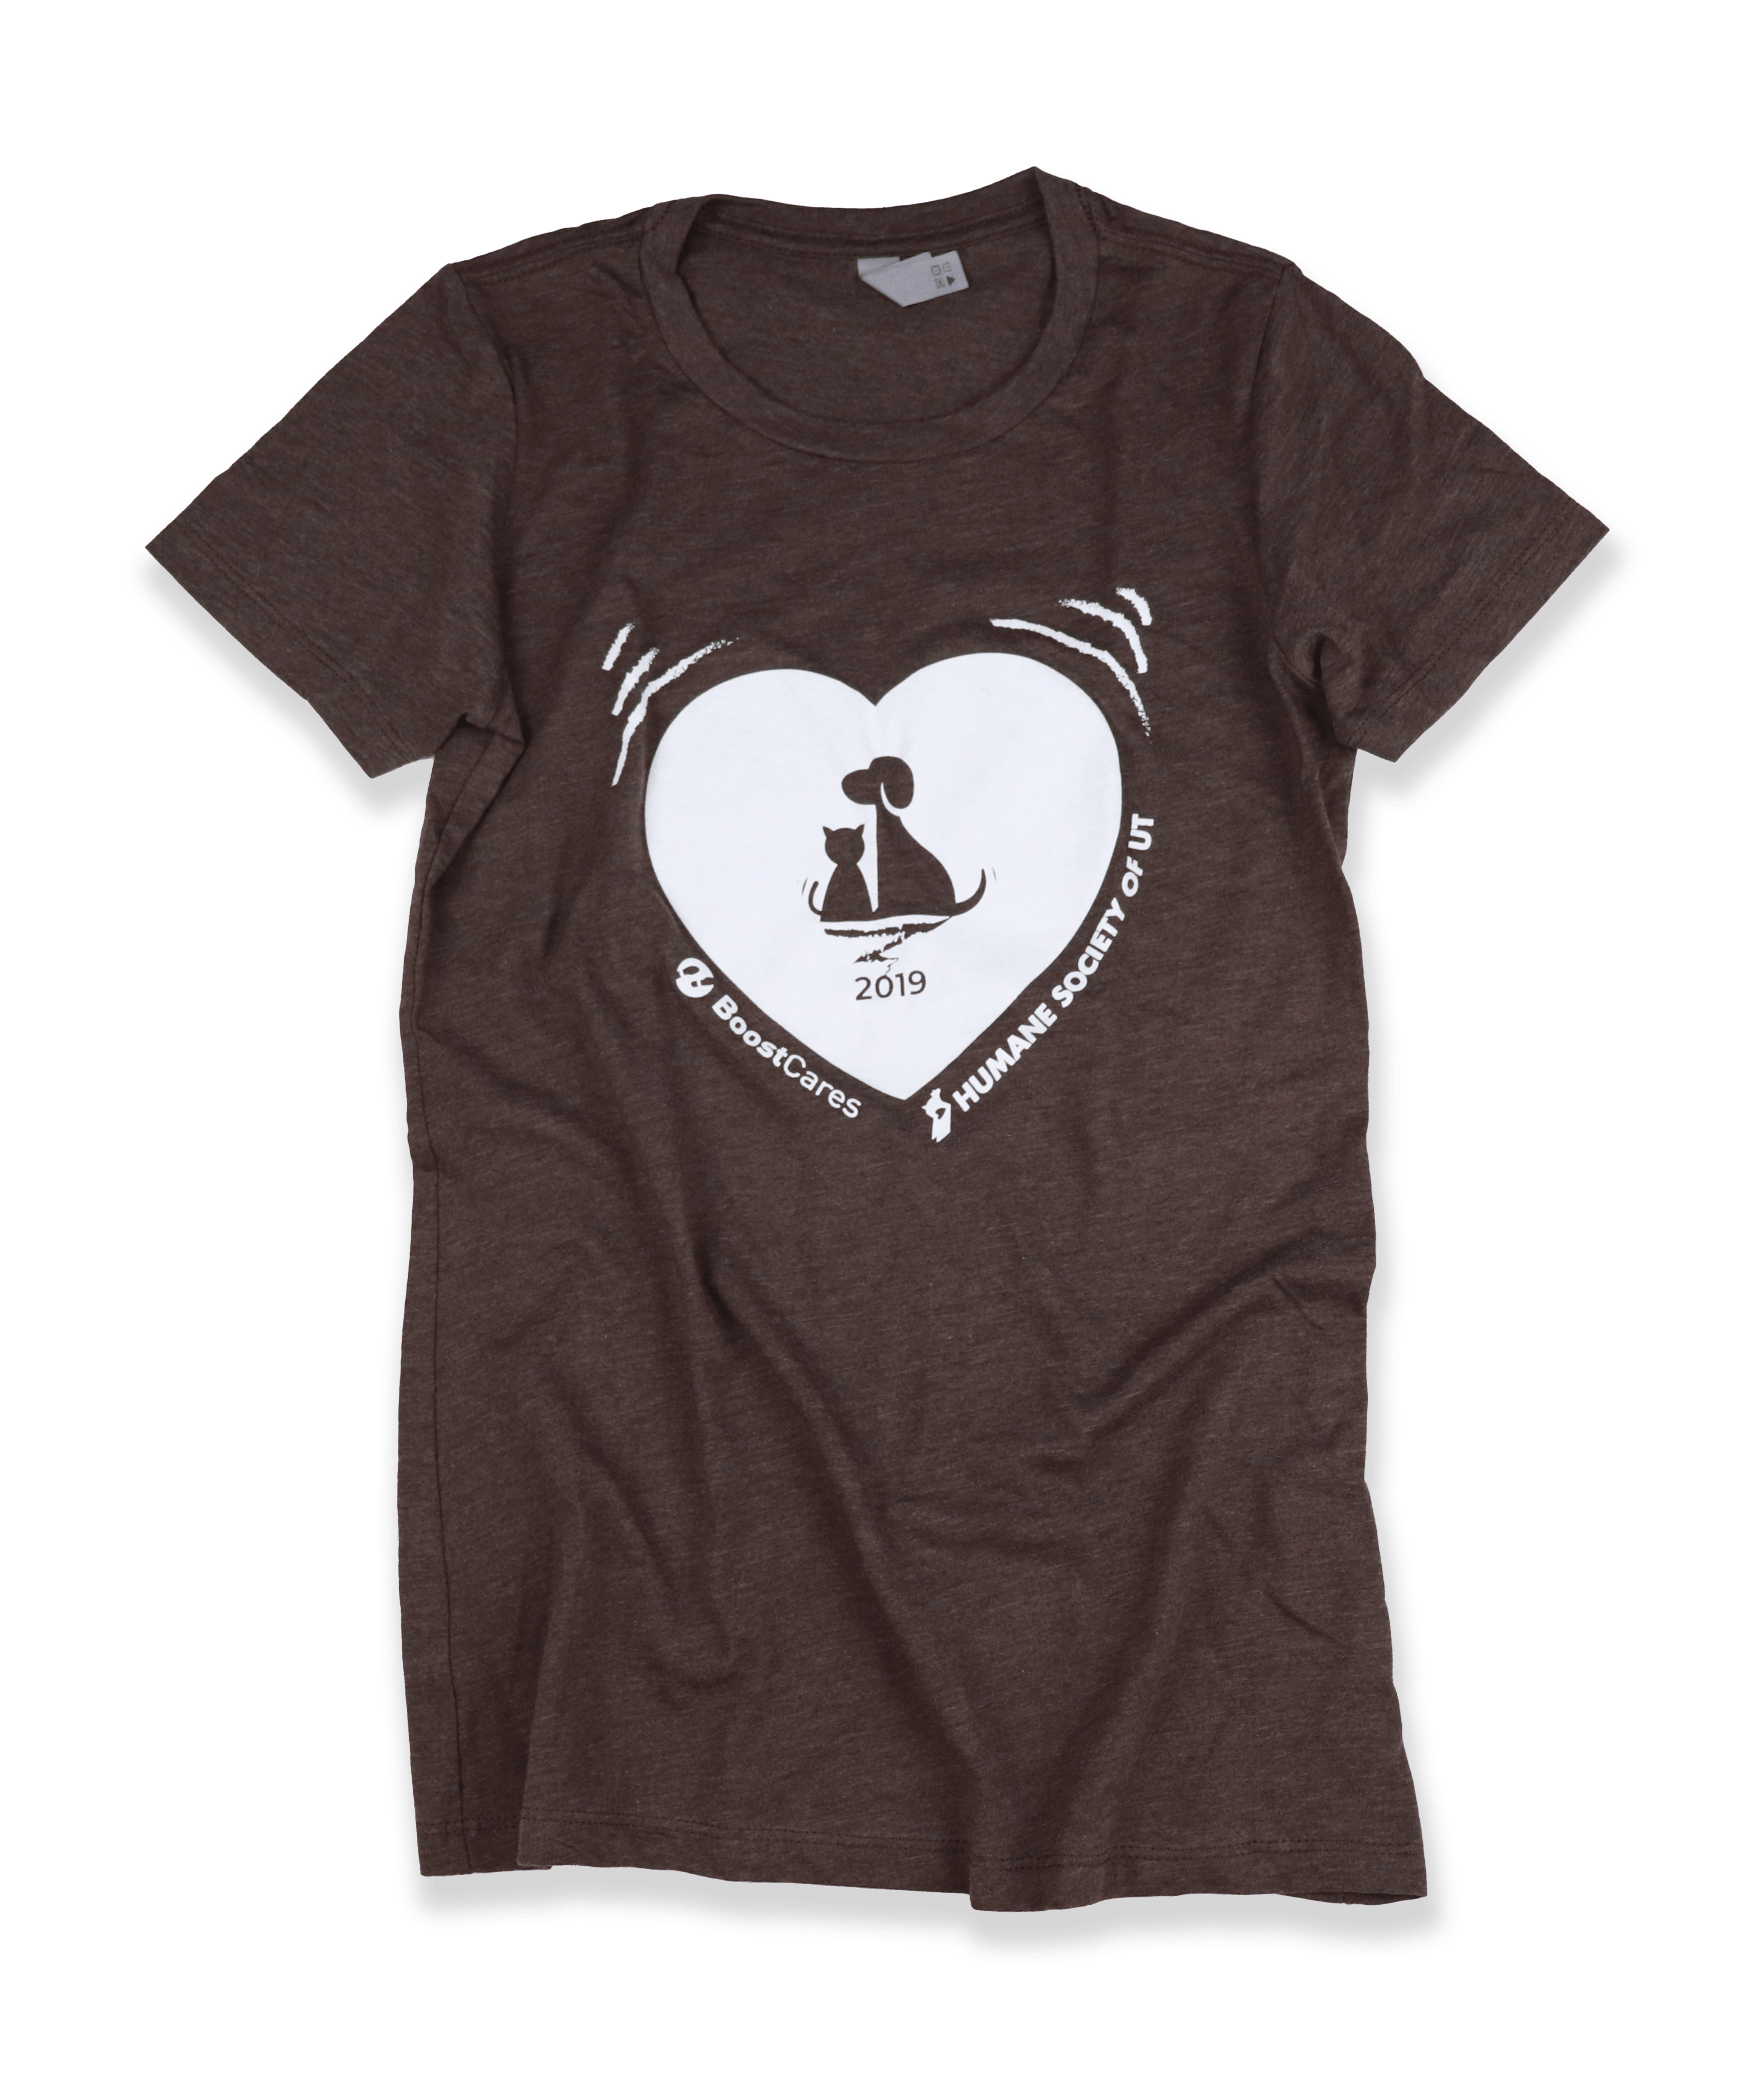 Boostability Humane Society t-shirt